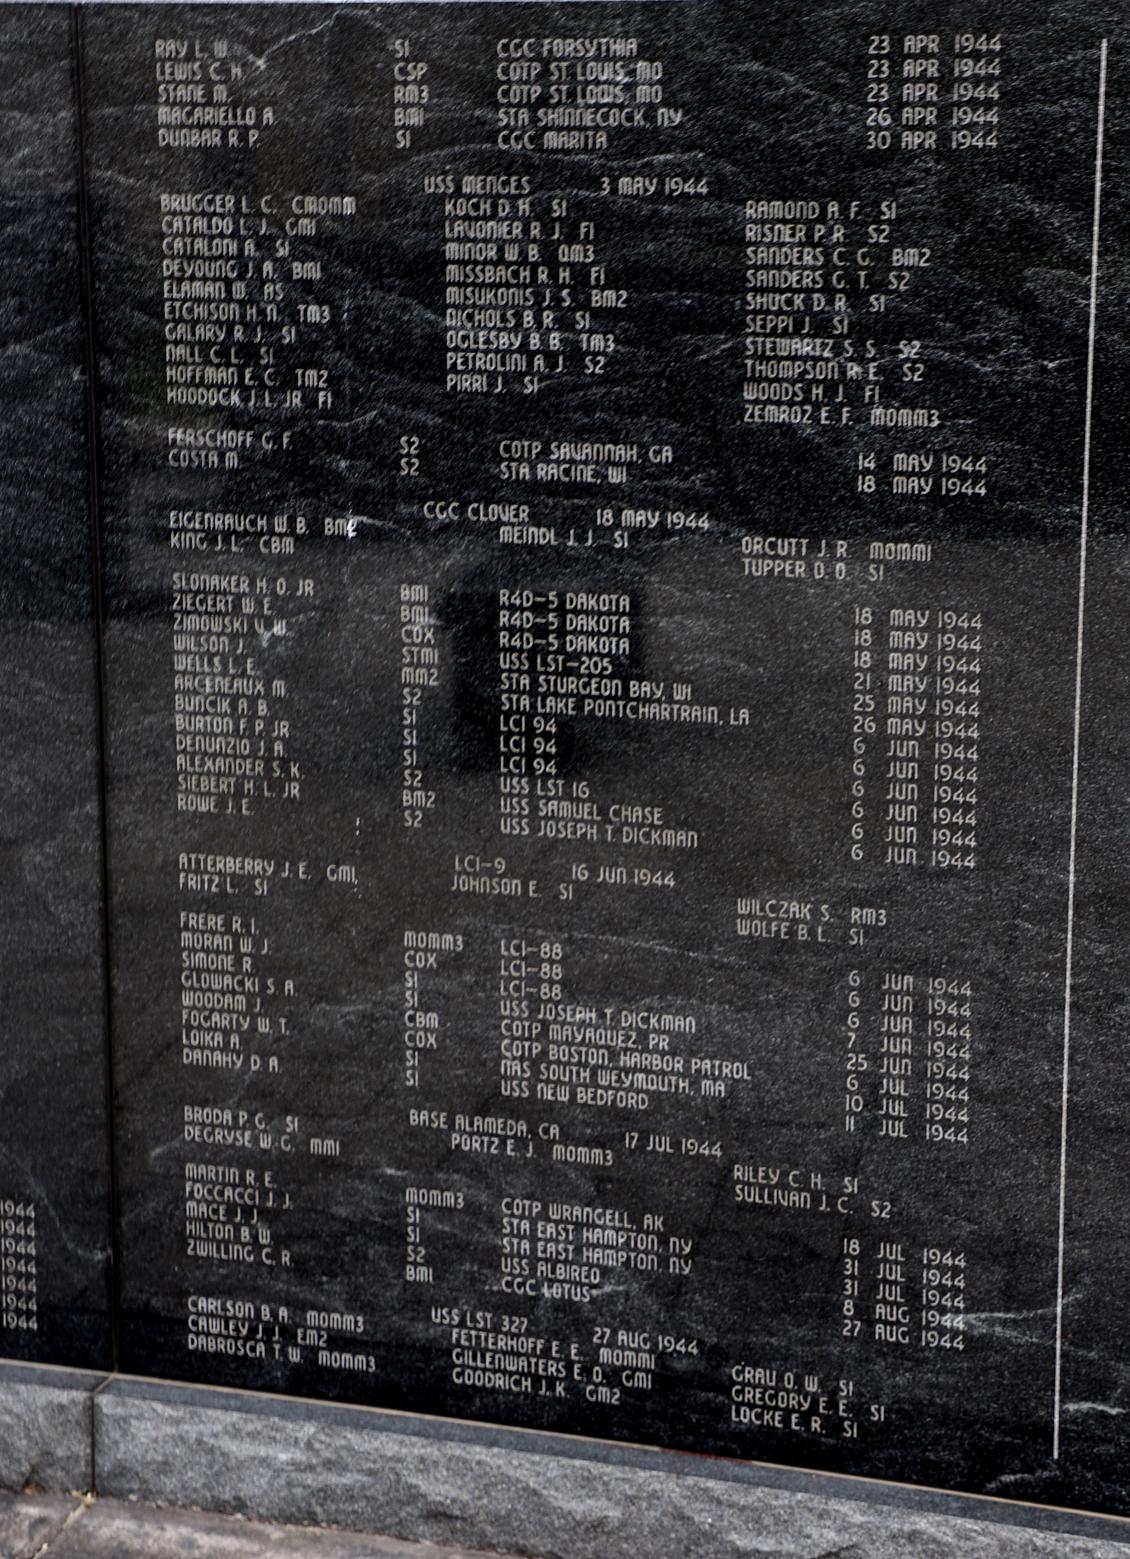 Cape May CG Training Center - Coast Guard Enlisted Memorial 1944